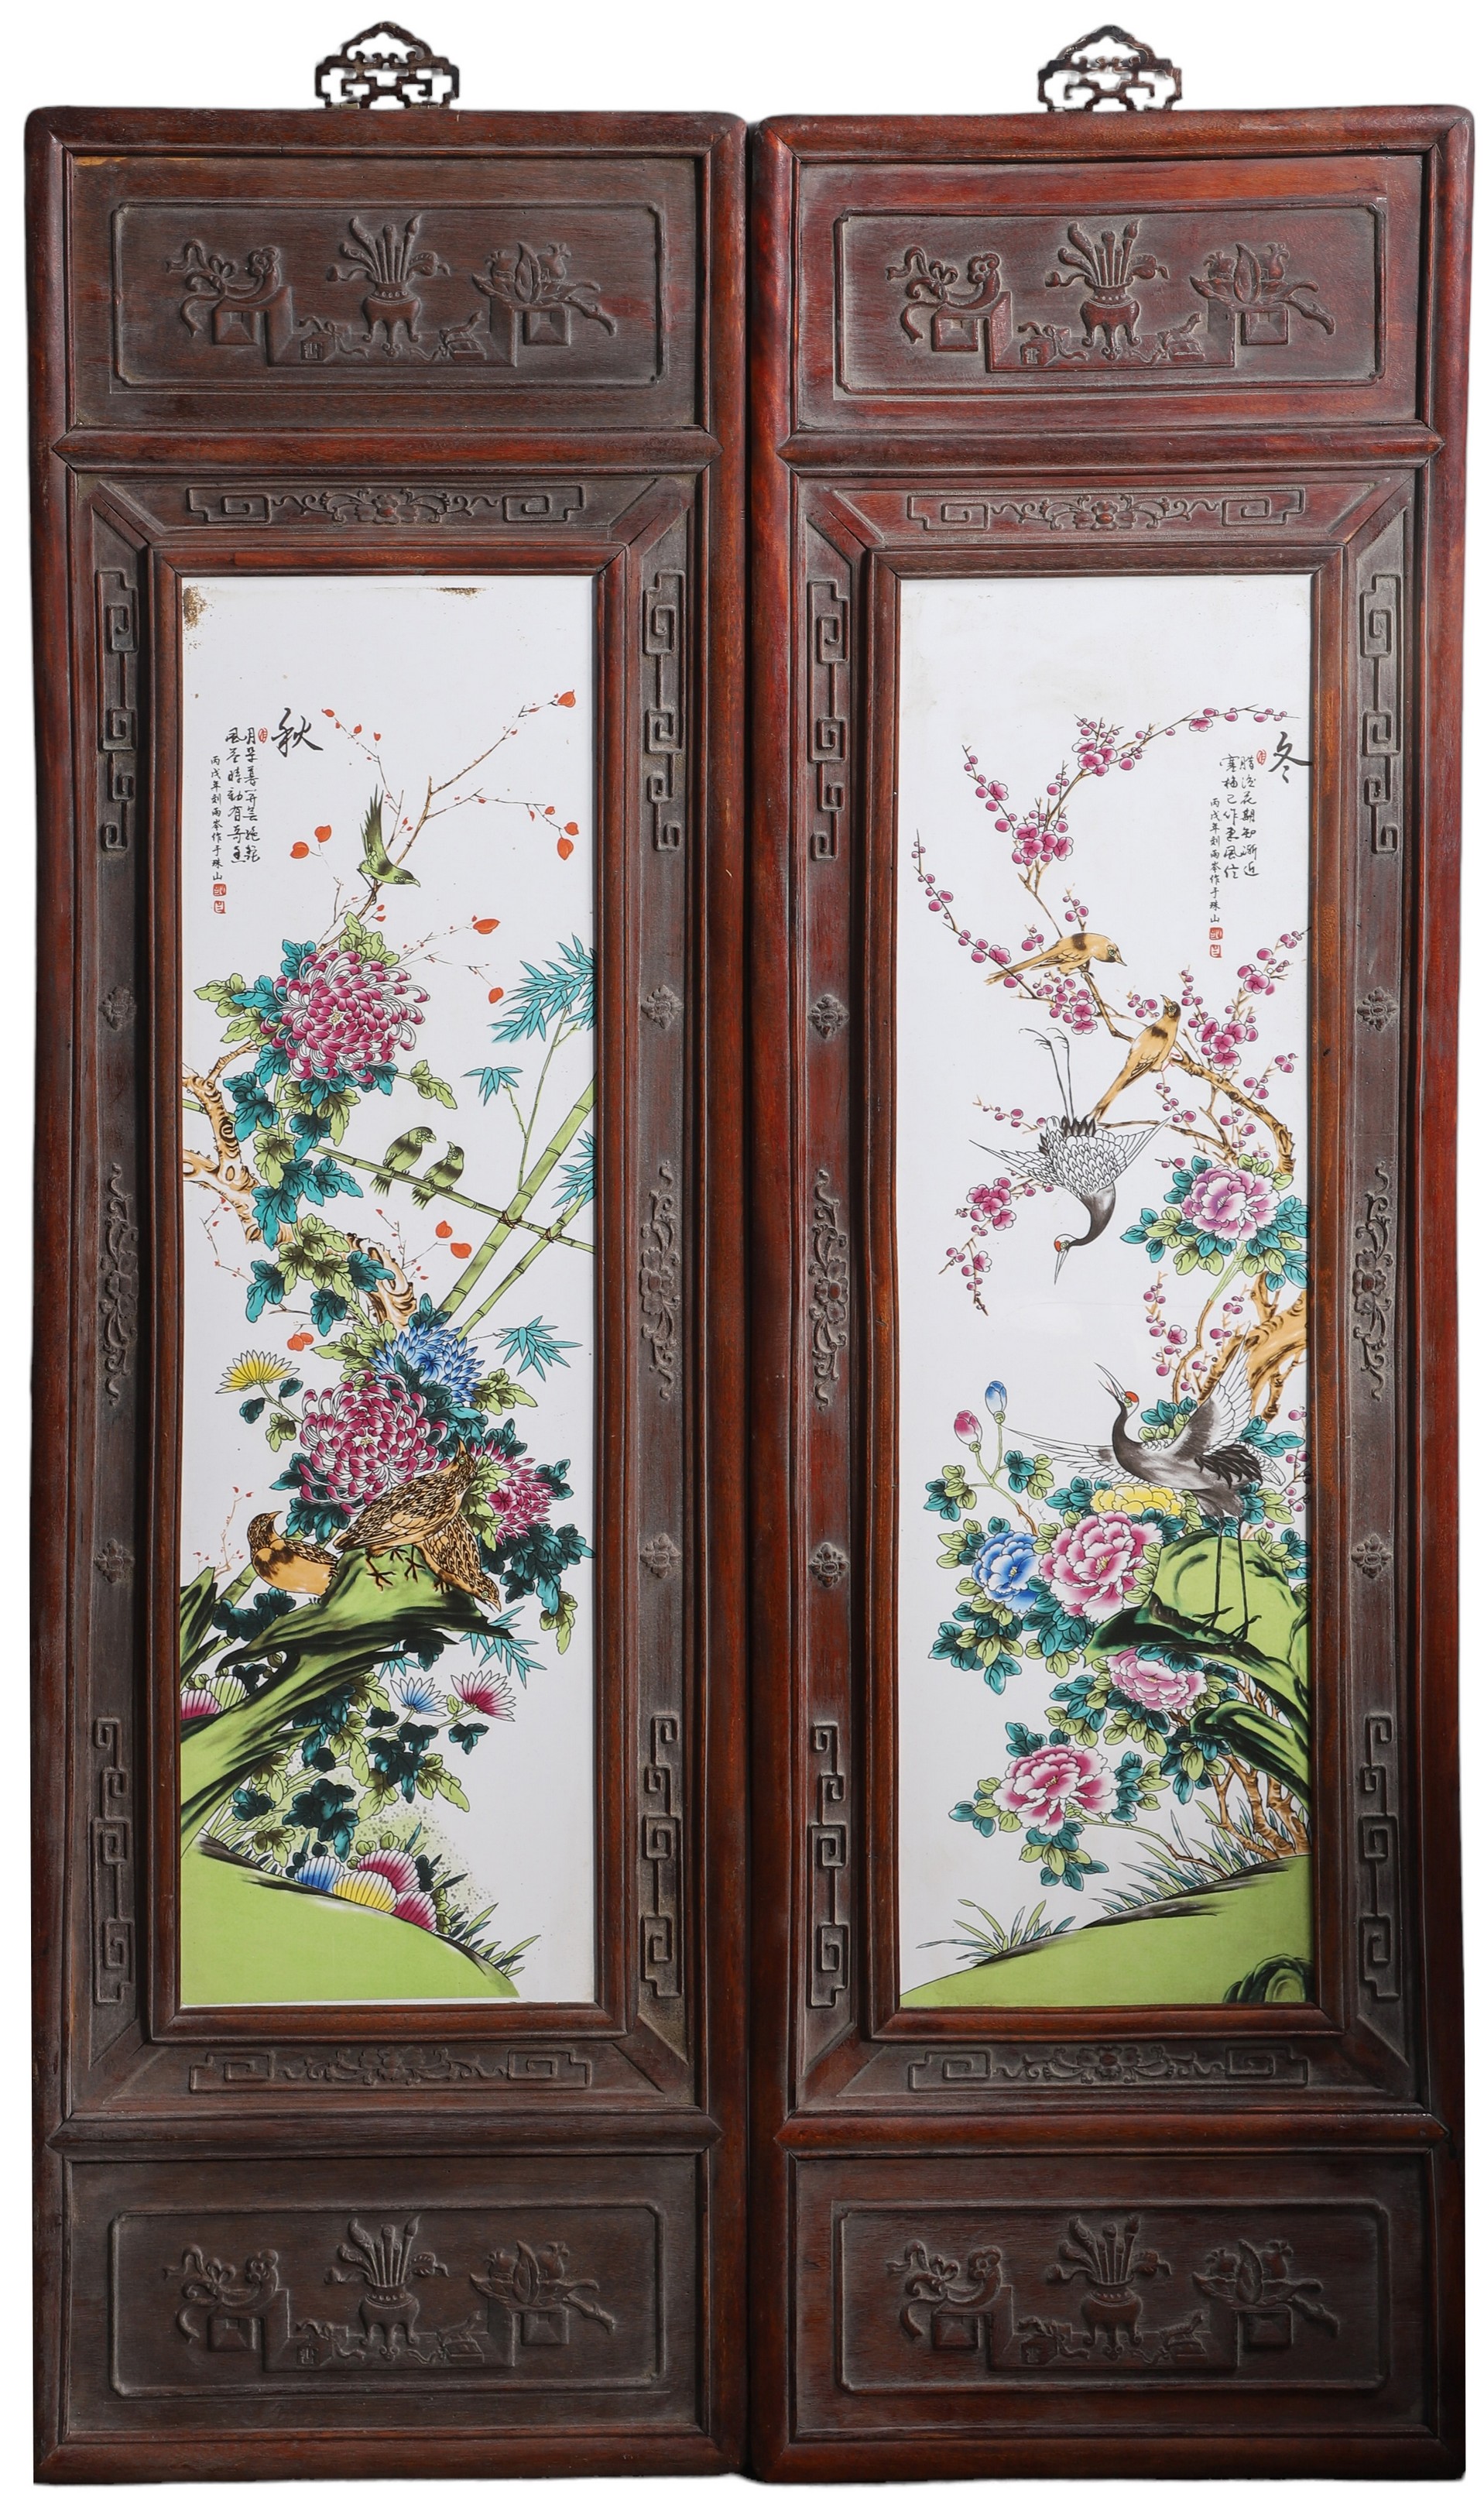 Pair of framed Chinese porcelain